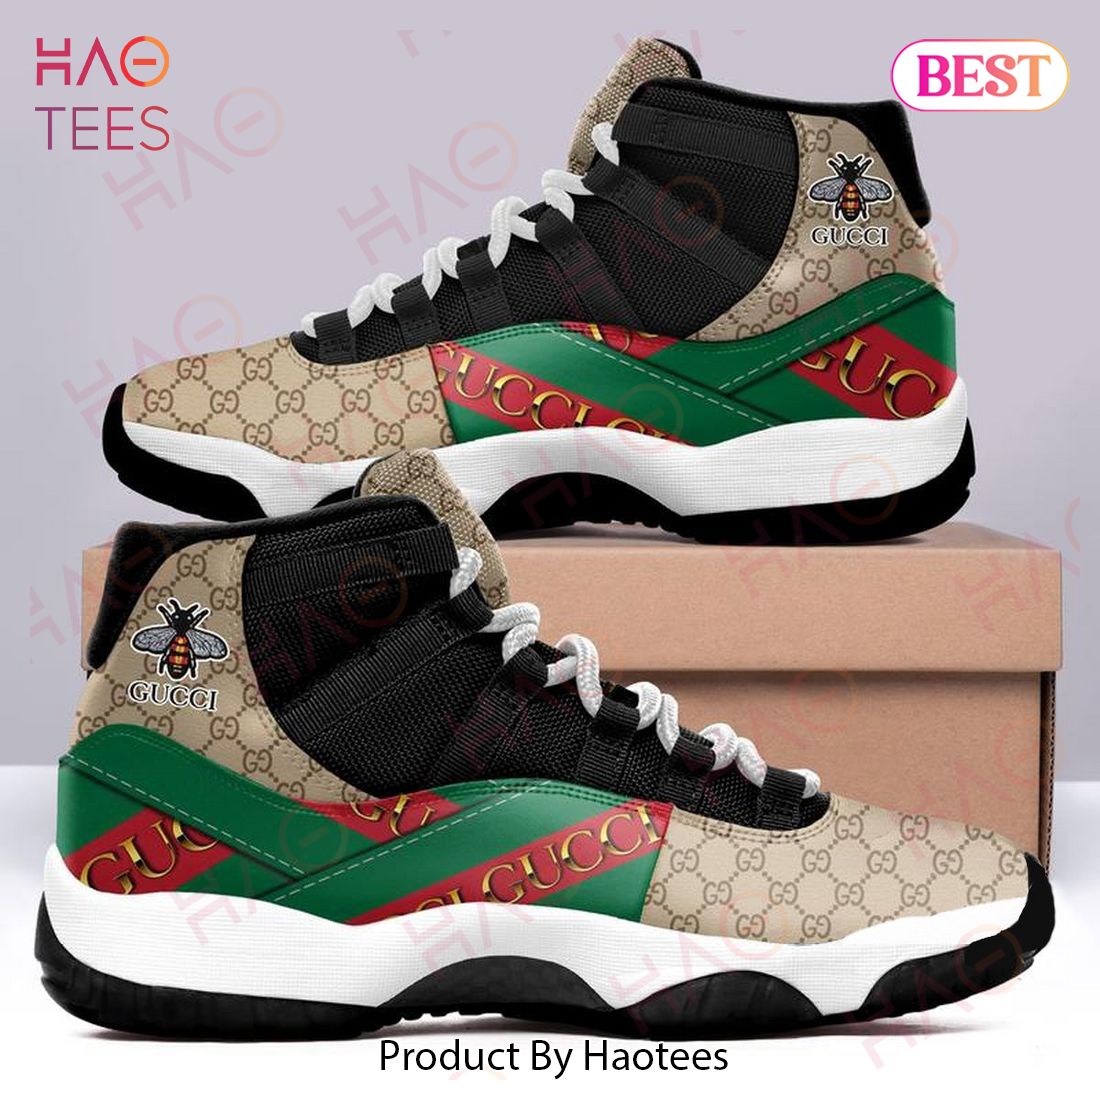 Luxury Gucci Bee Air Jordan 11 Shoes Hot 2022 GC Sneakers Gifts For Men Women